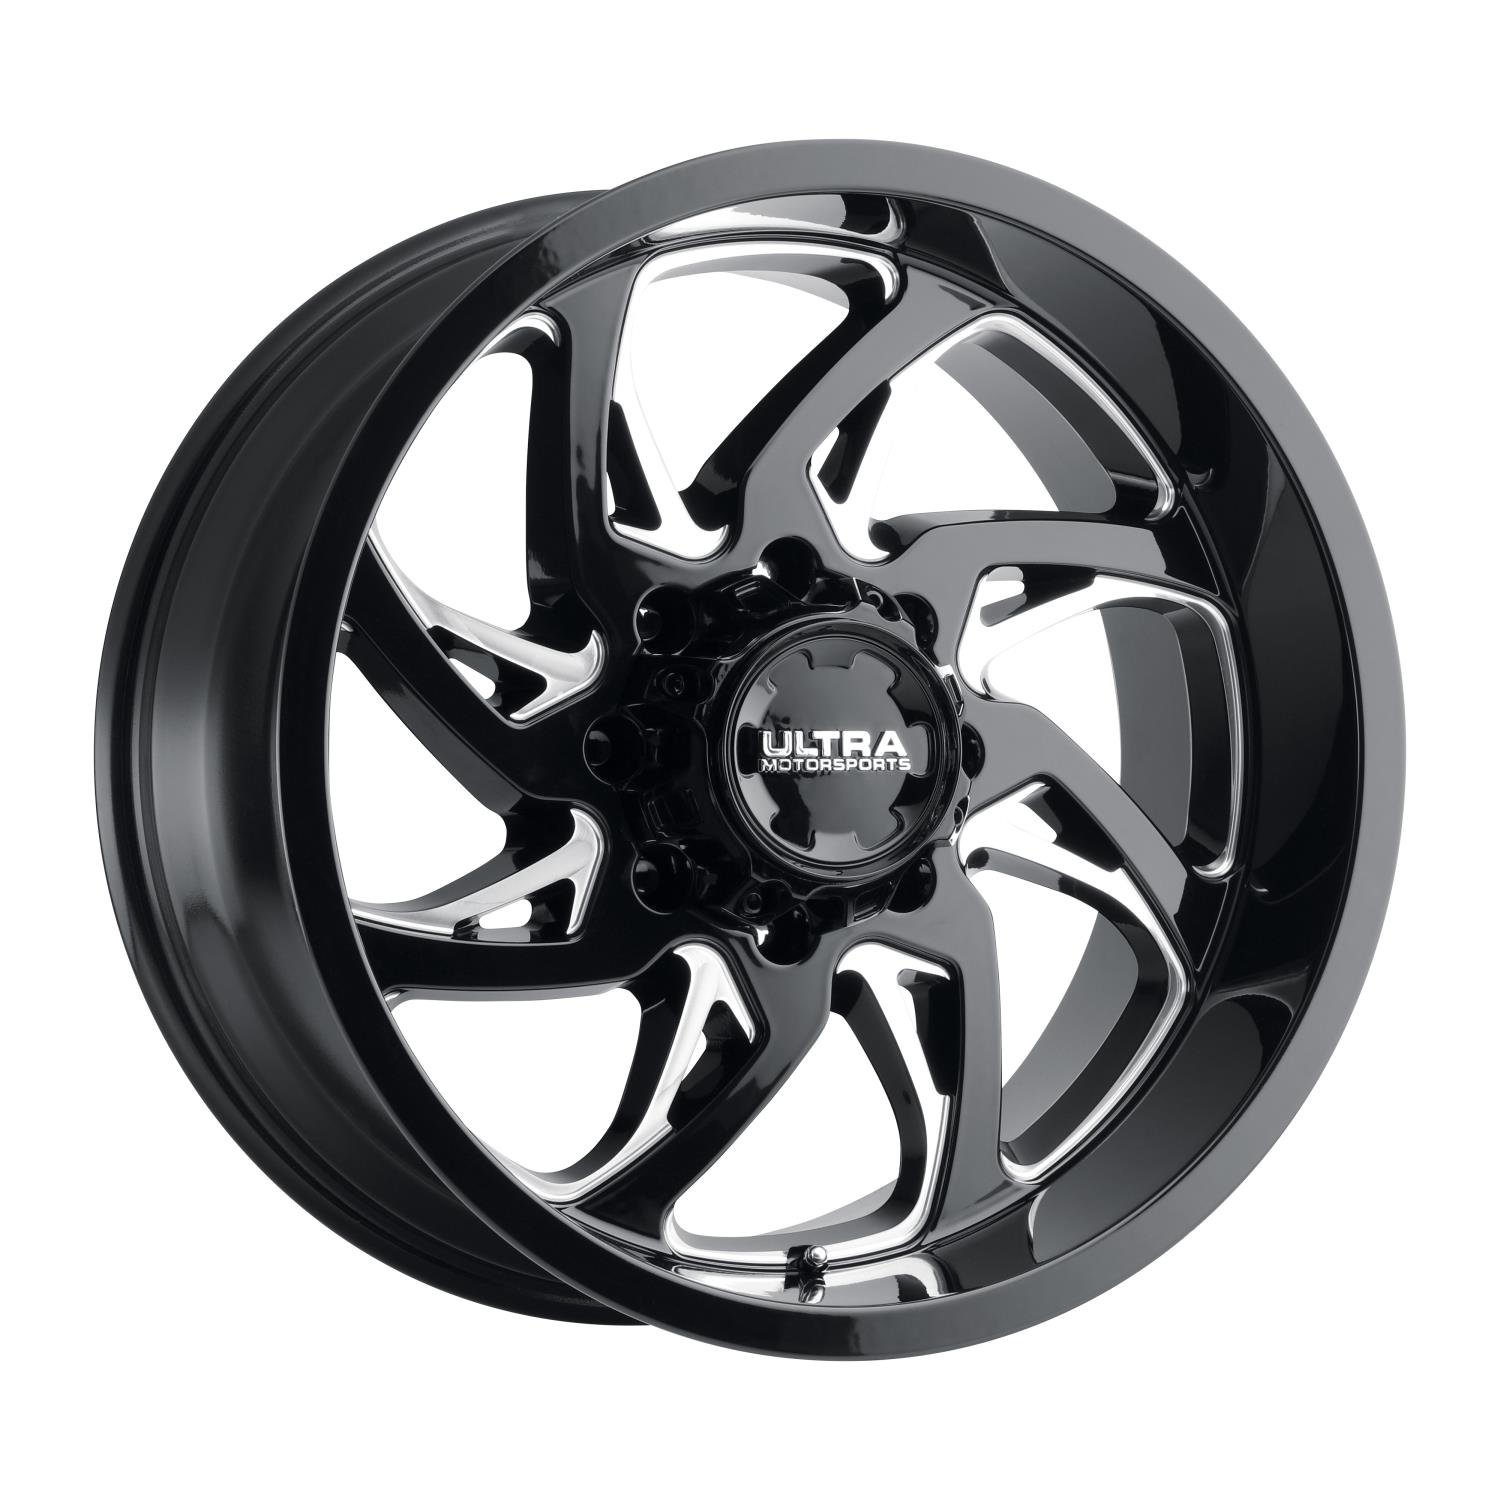 230-Series Villain Wheel, Size: 20x9", Bolt Pattern: 8x6.5" [Gloss Black w/Milled Accents]